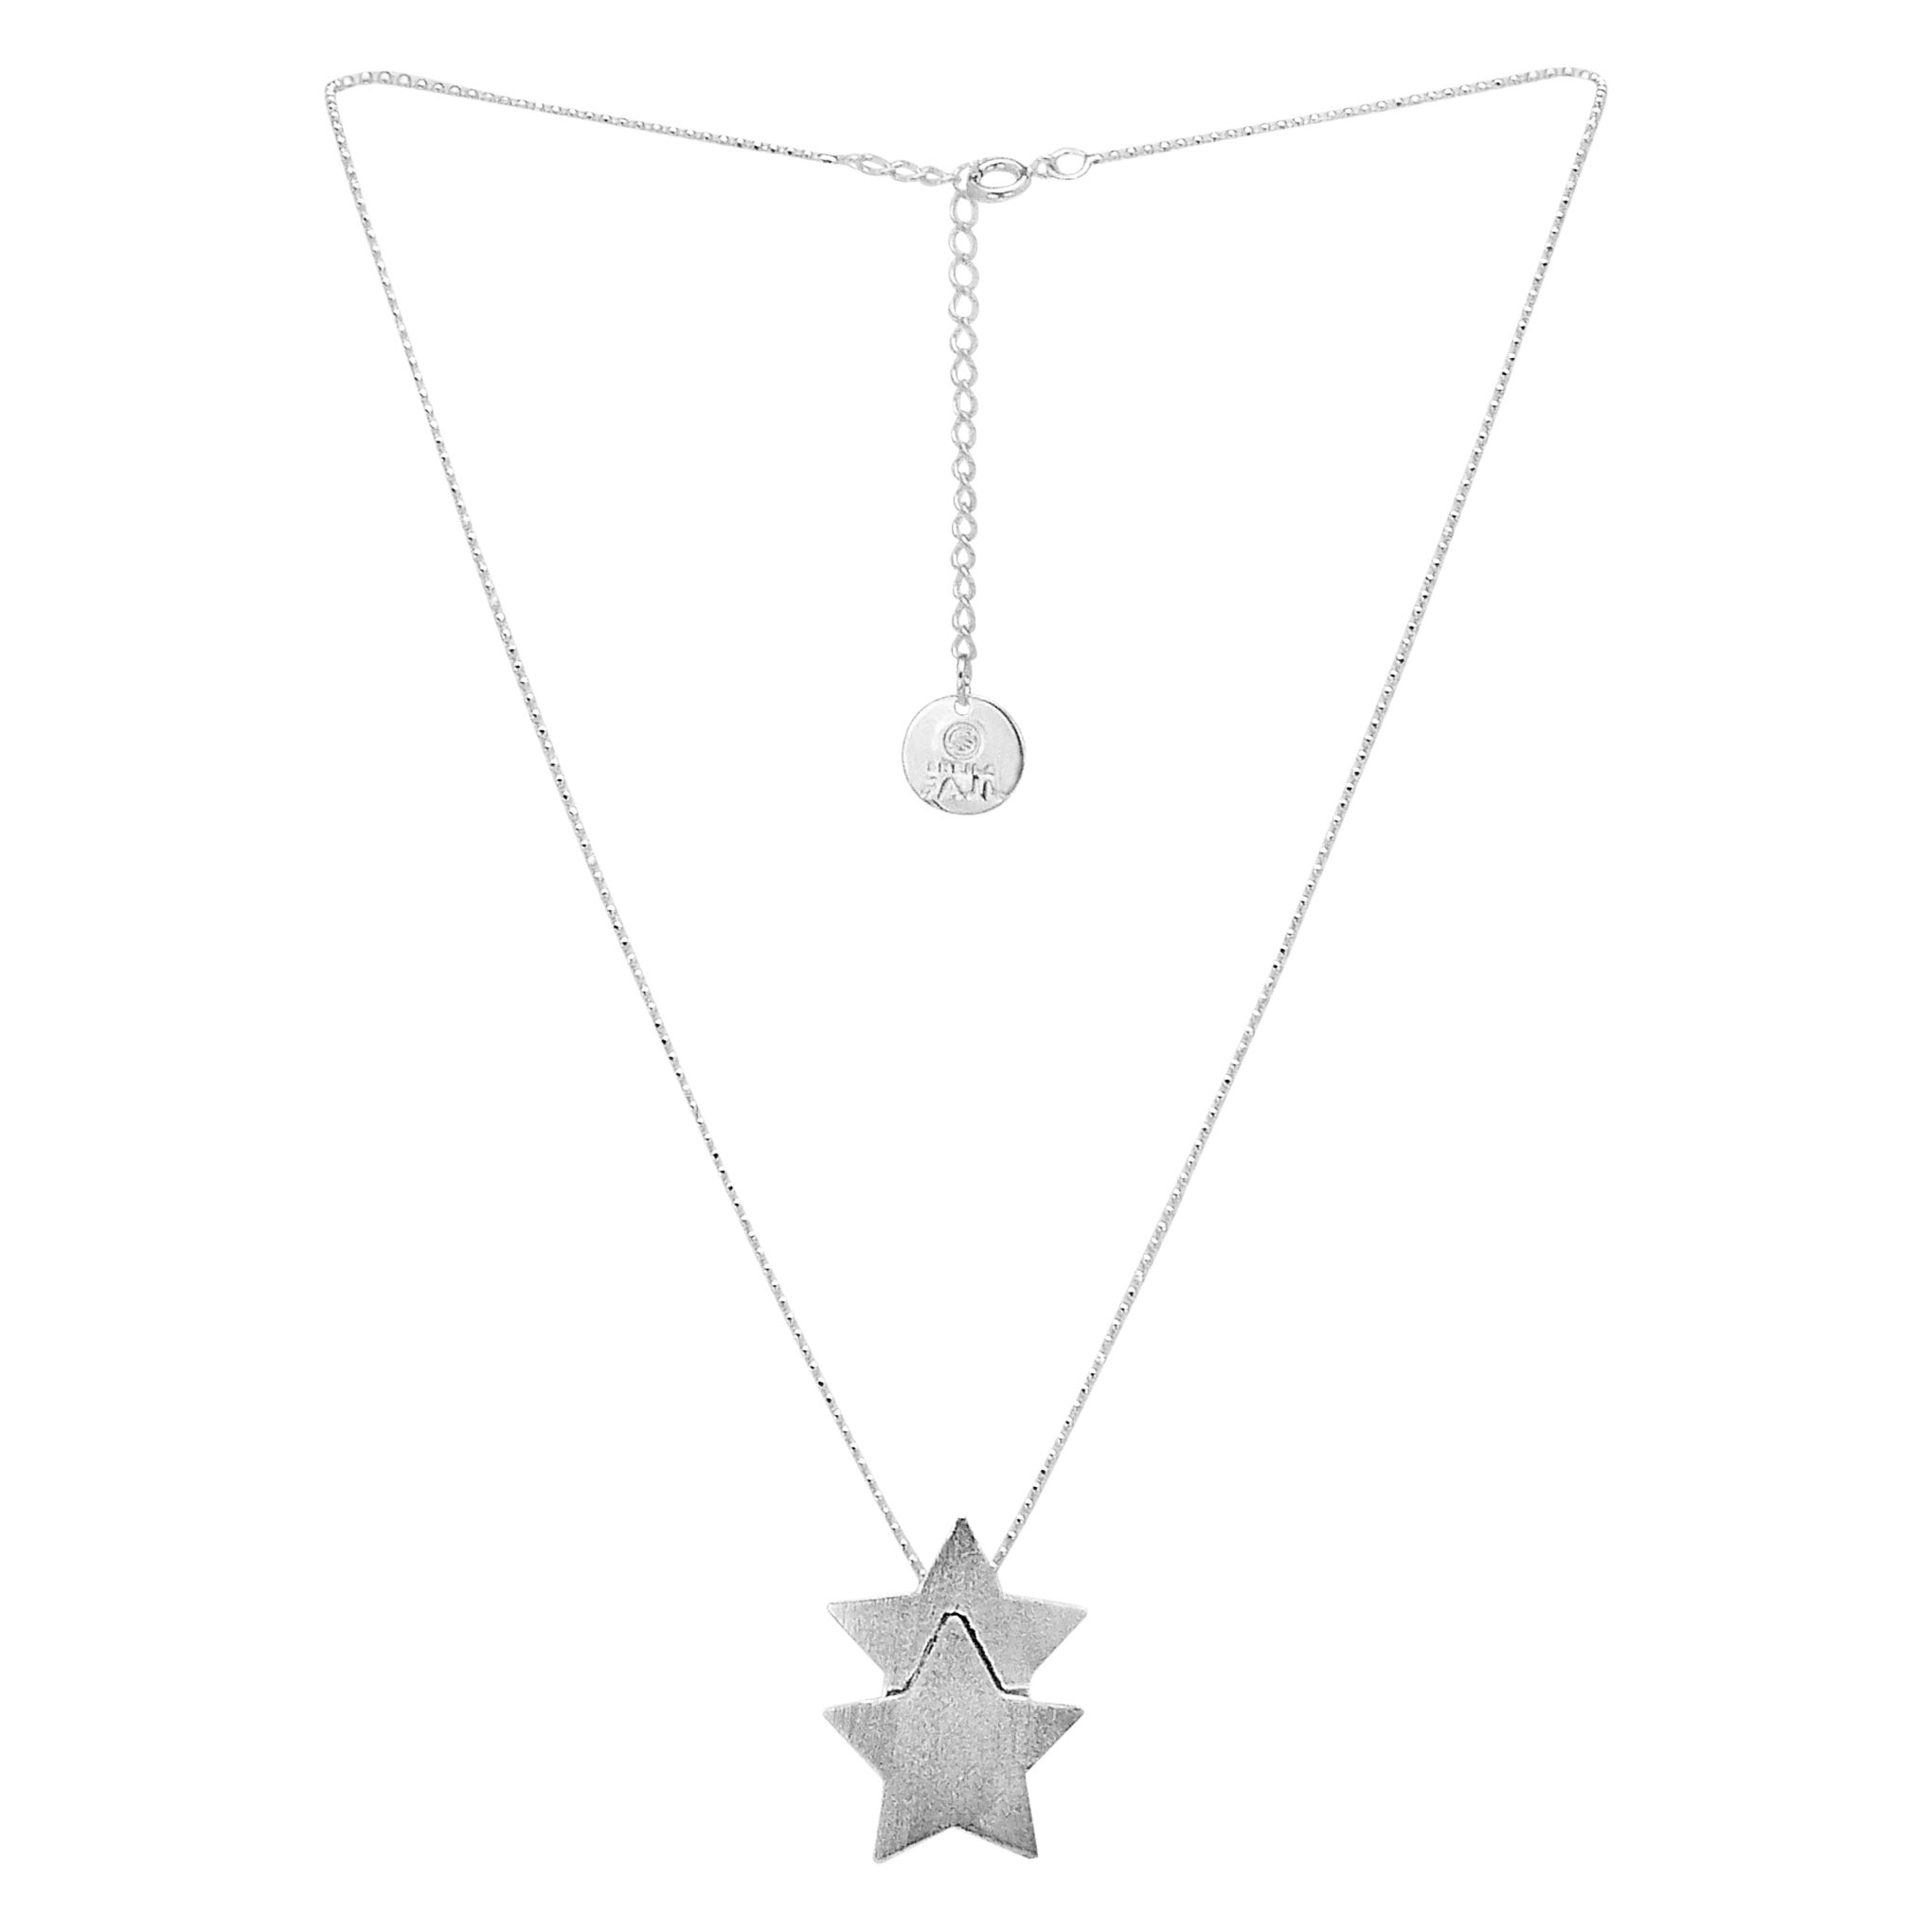 Sheila Fajl Castor Double Star Pendant Necklace in Silver Plated